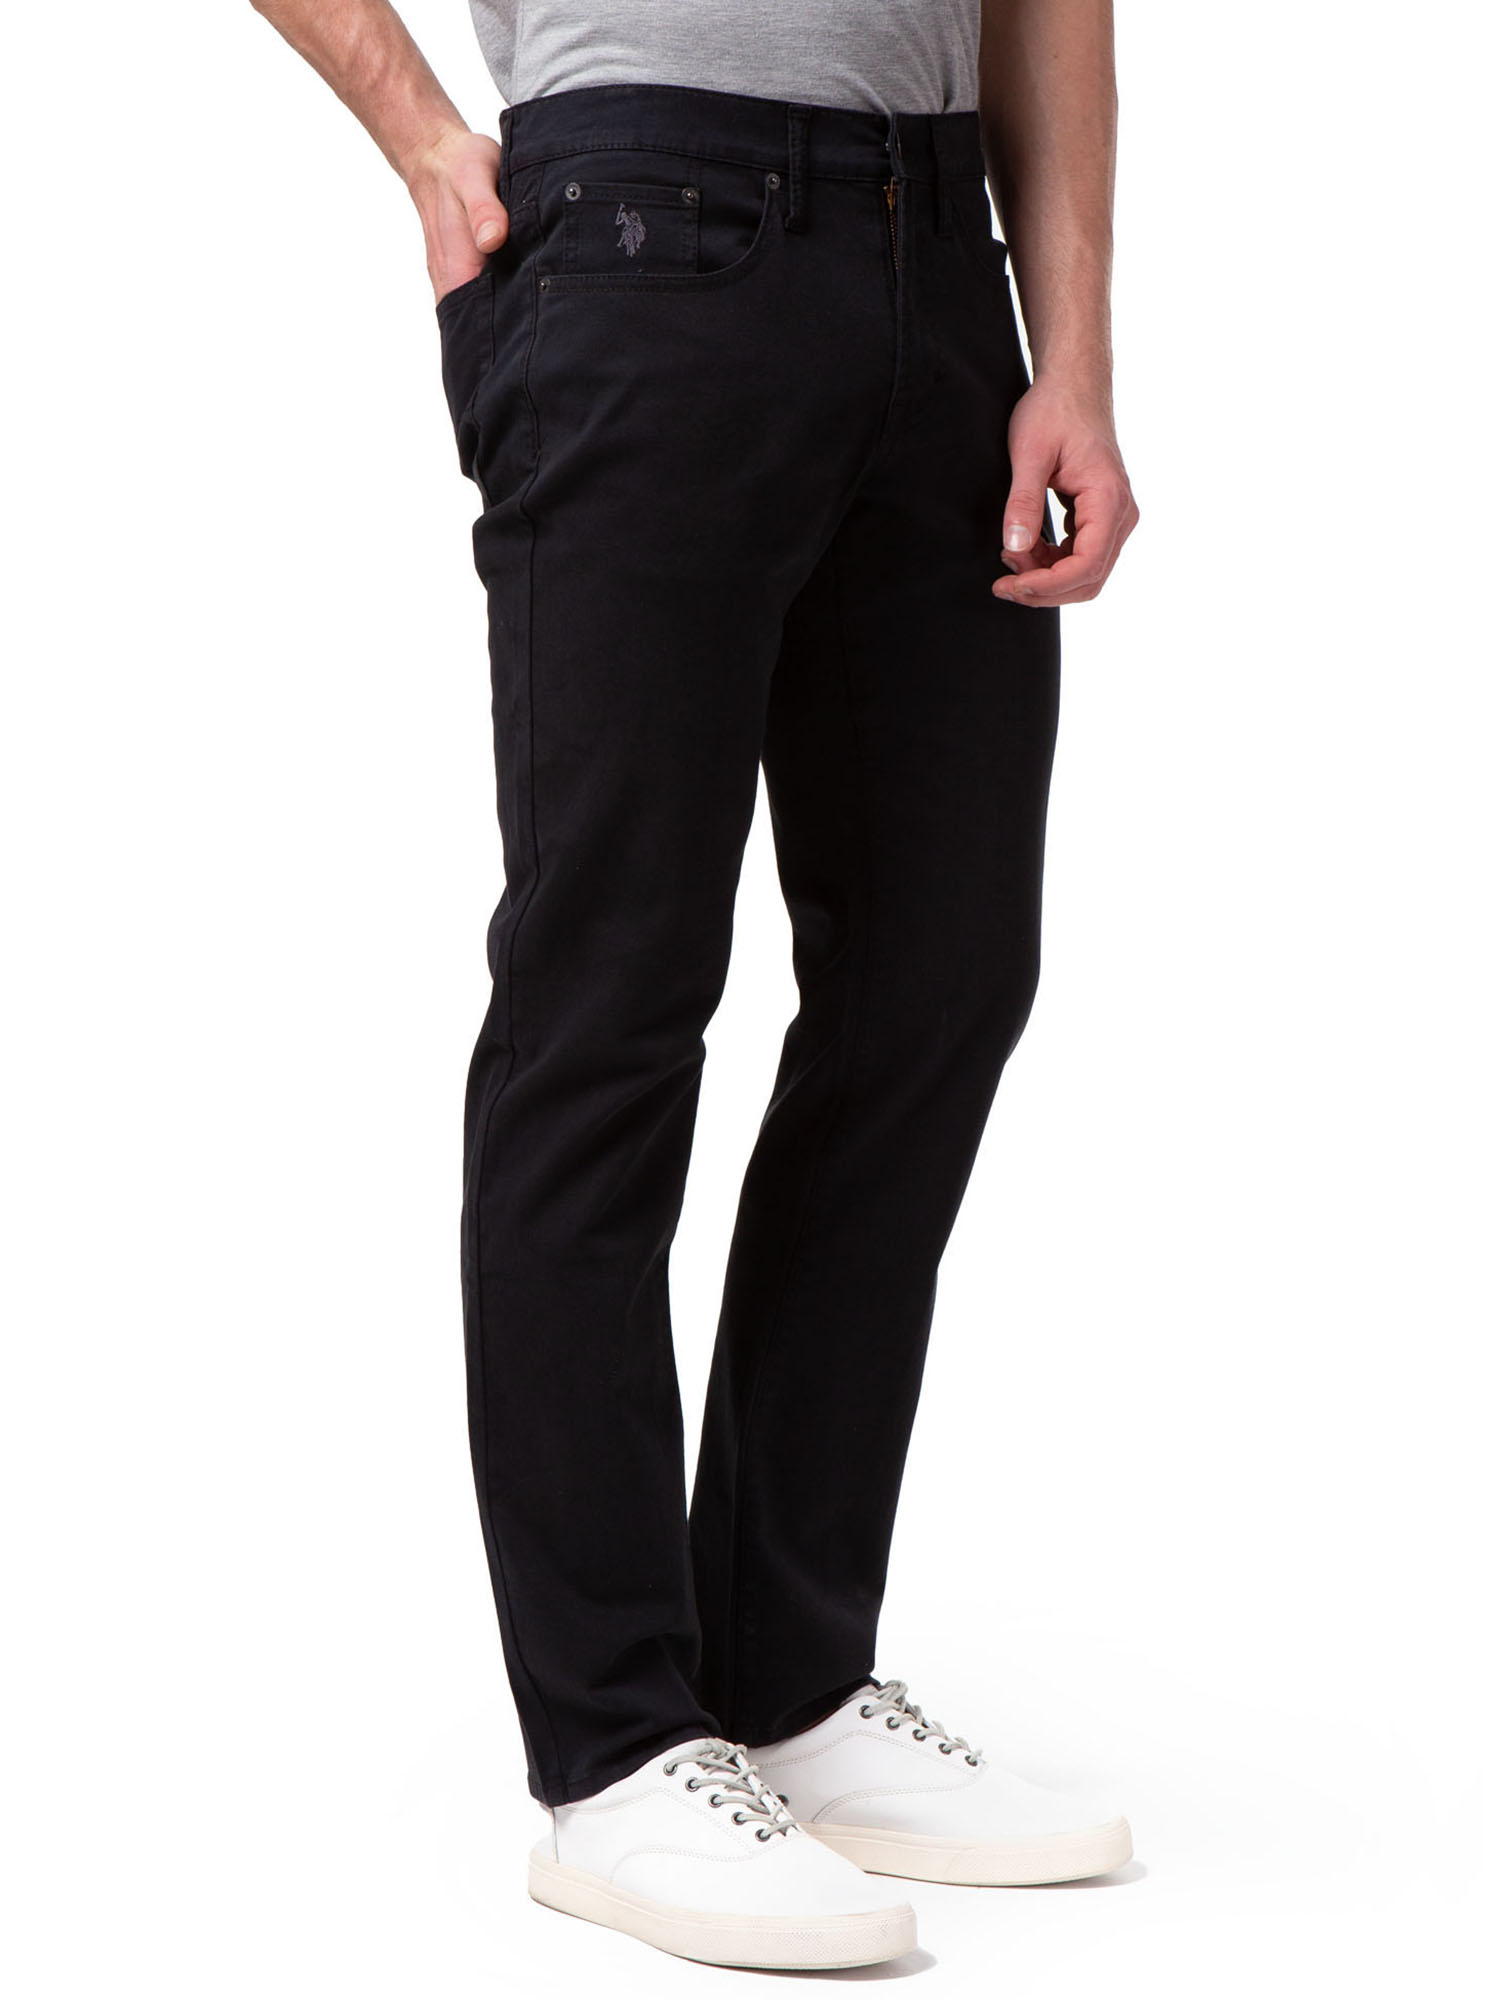 U.S. Polo Assn. Men's Slim Straight Stretch Twill 5 Pocket Pants - image 4 of 4